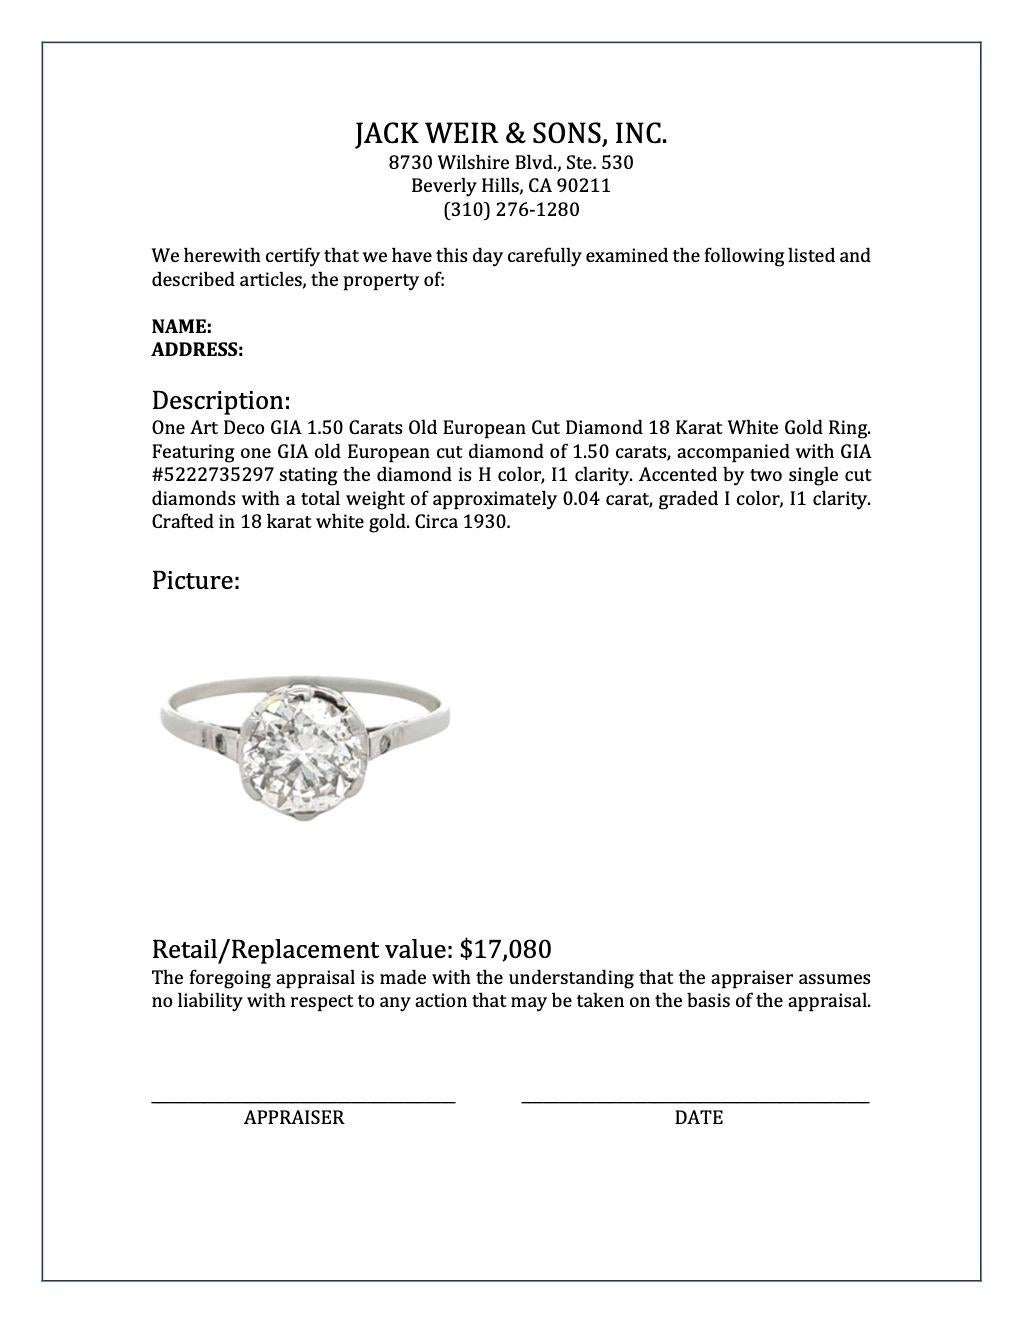 Art Deco GIA 1.50 Carats Old European Cut Diamond 18 Karat White Gold Ring 3